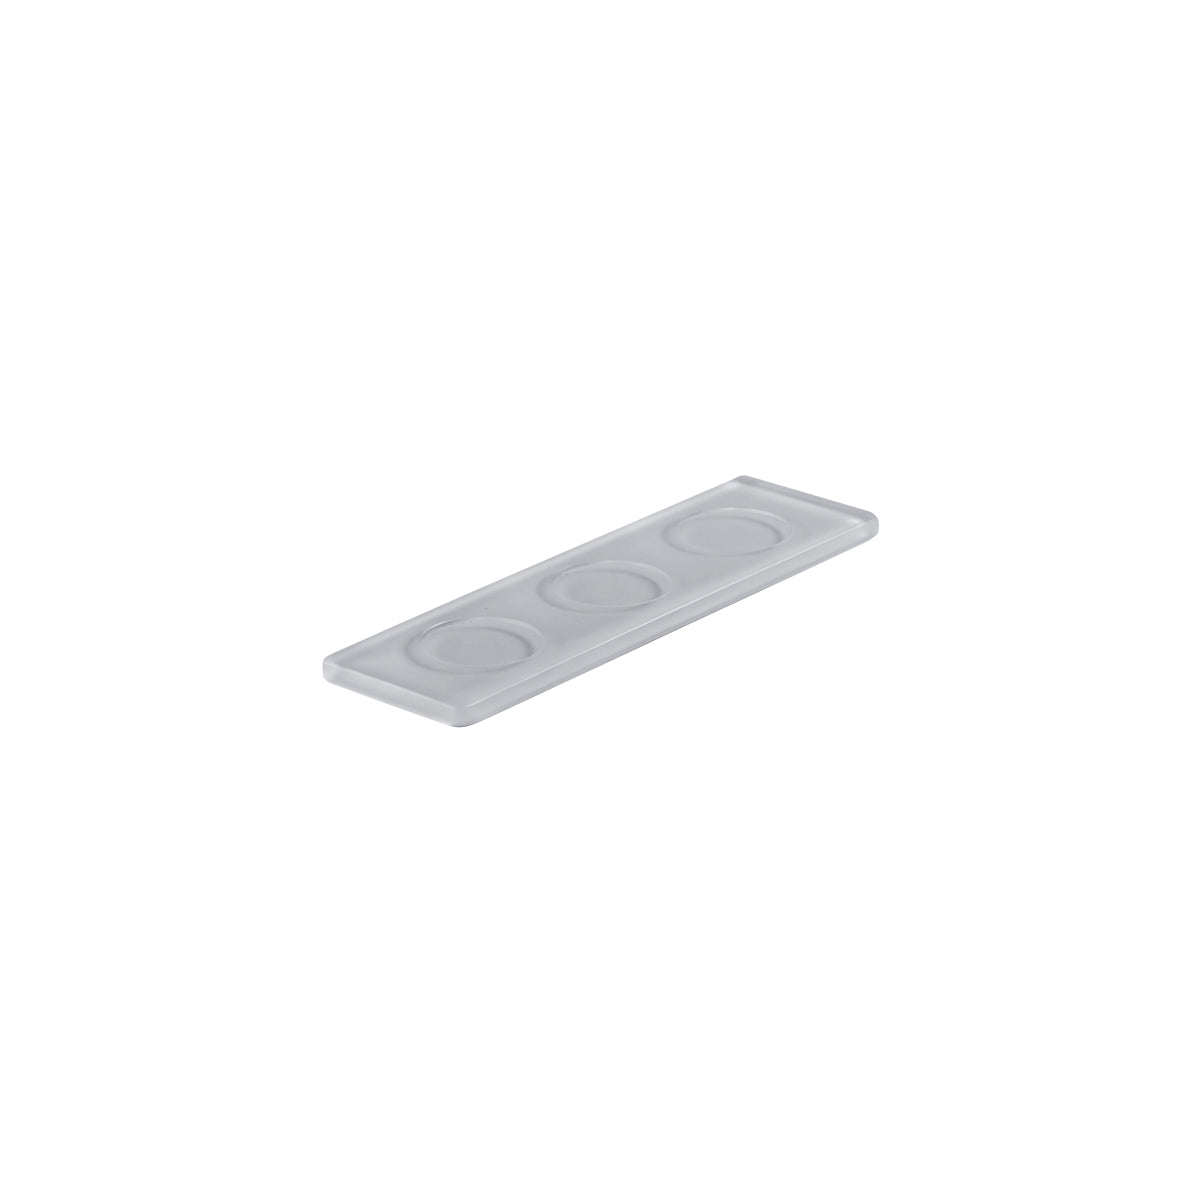 MLP116045 Mealplak Tray With 3 Indents Concrete 245x70x10mm Tomkin Australia Hospitality Supplies